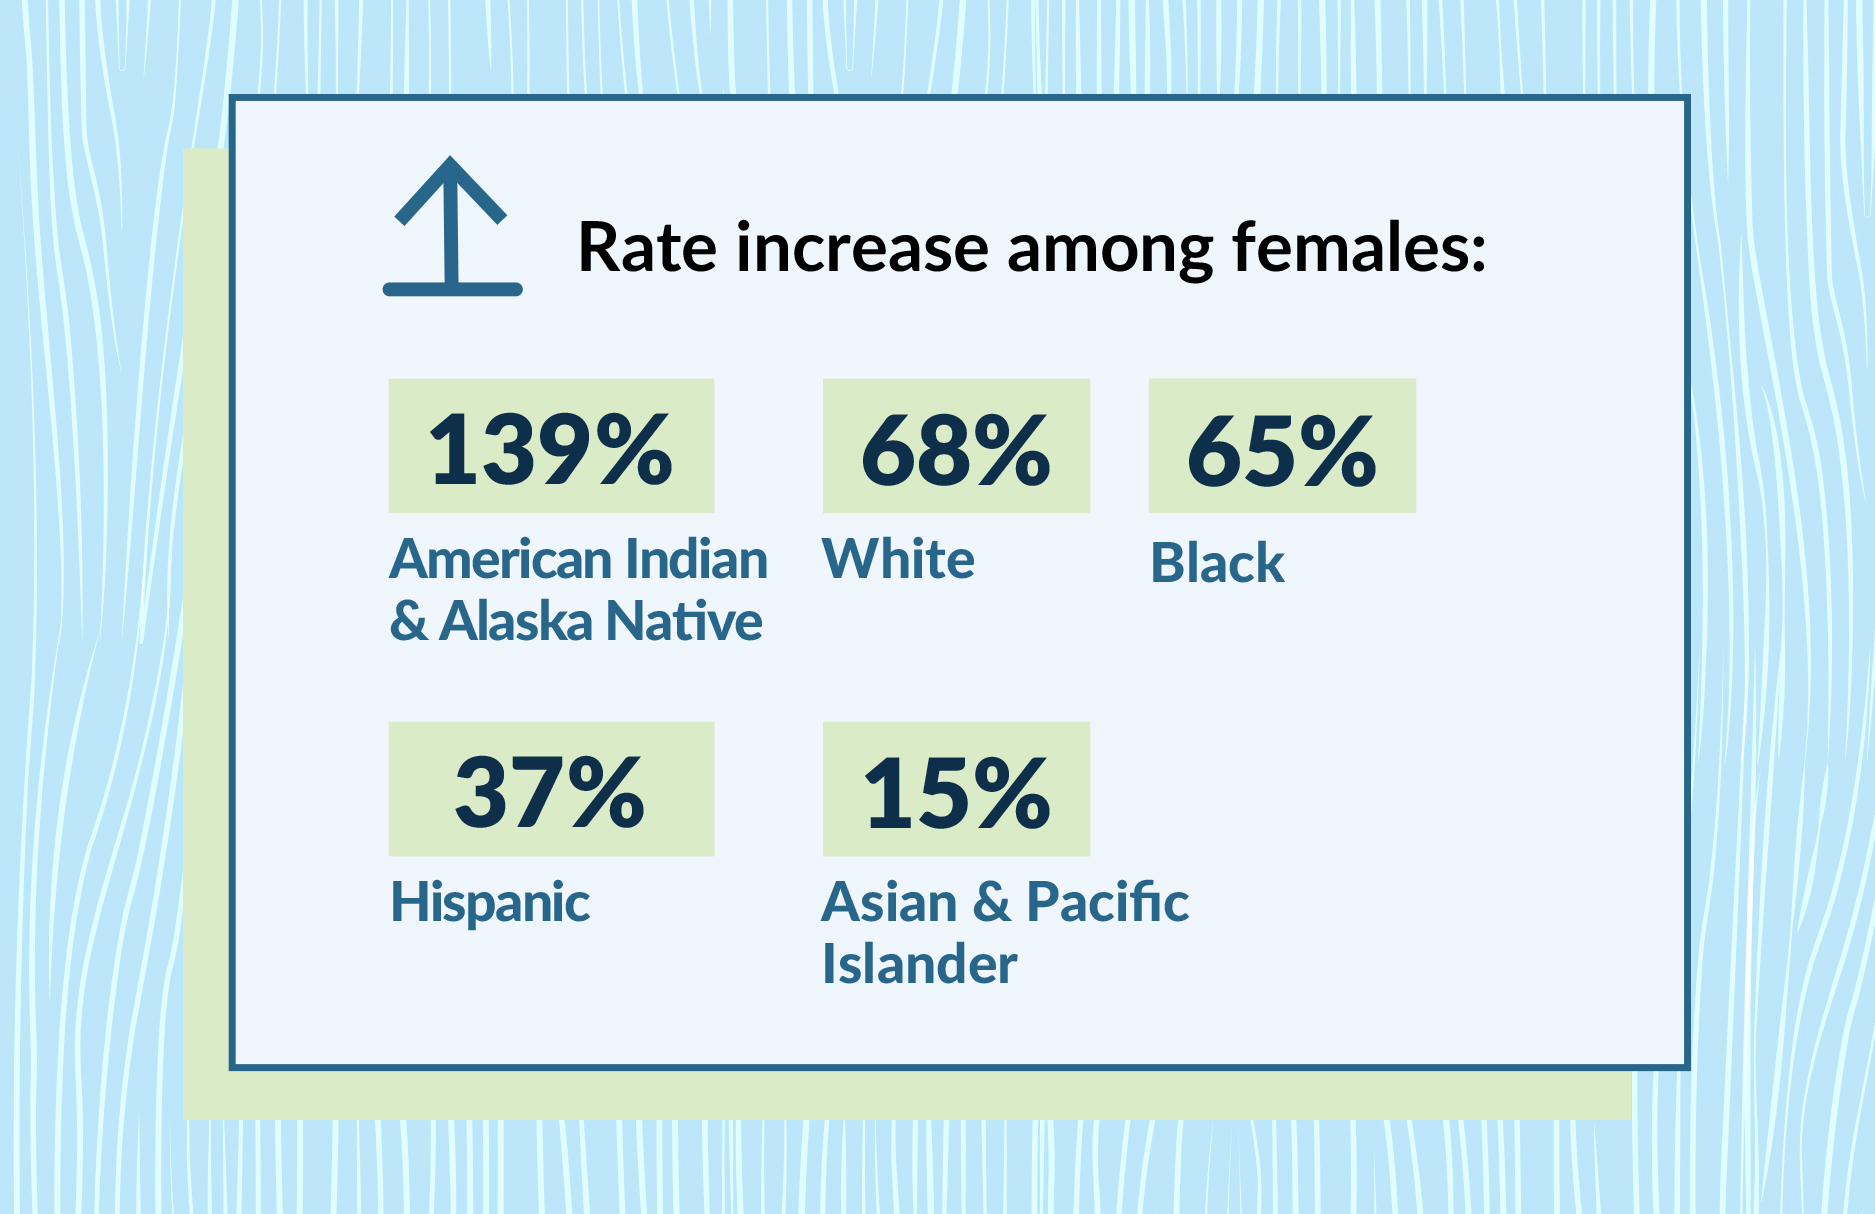 Rate increase among females: 139% American Indian & Alaska Native, 68% White, 65% Black, 37% Hispanic, and 15% Asian & Pacific Islander